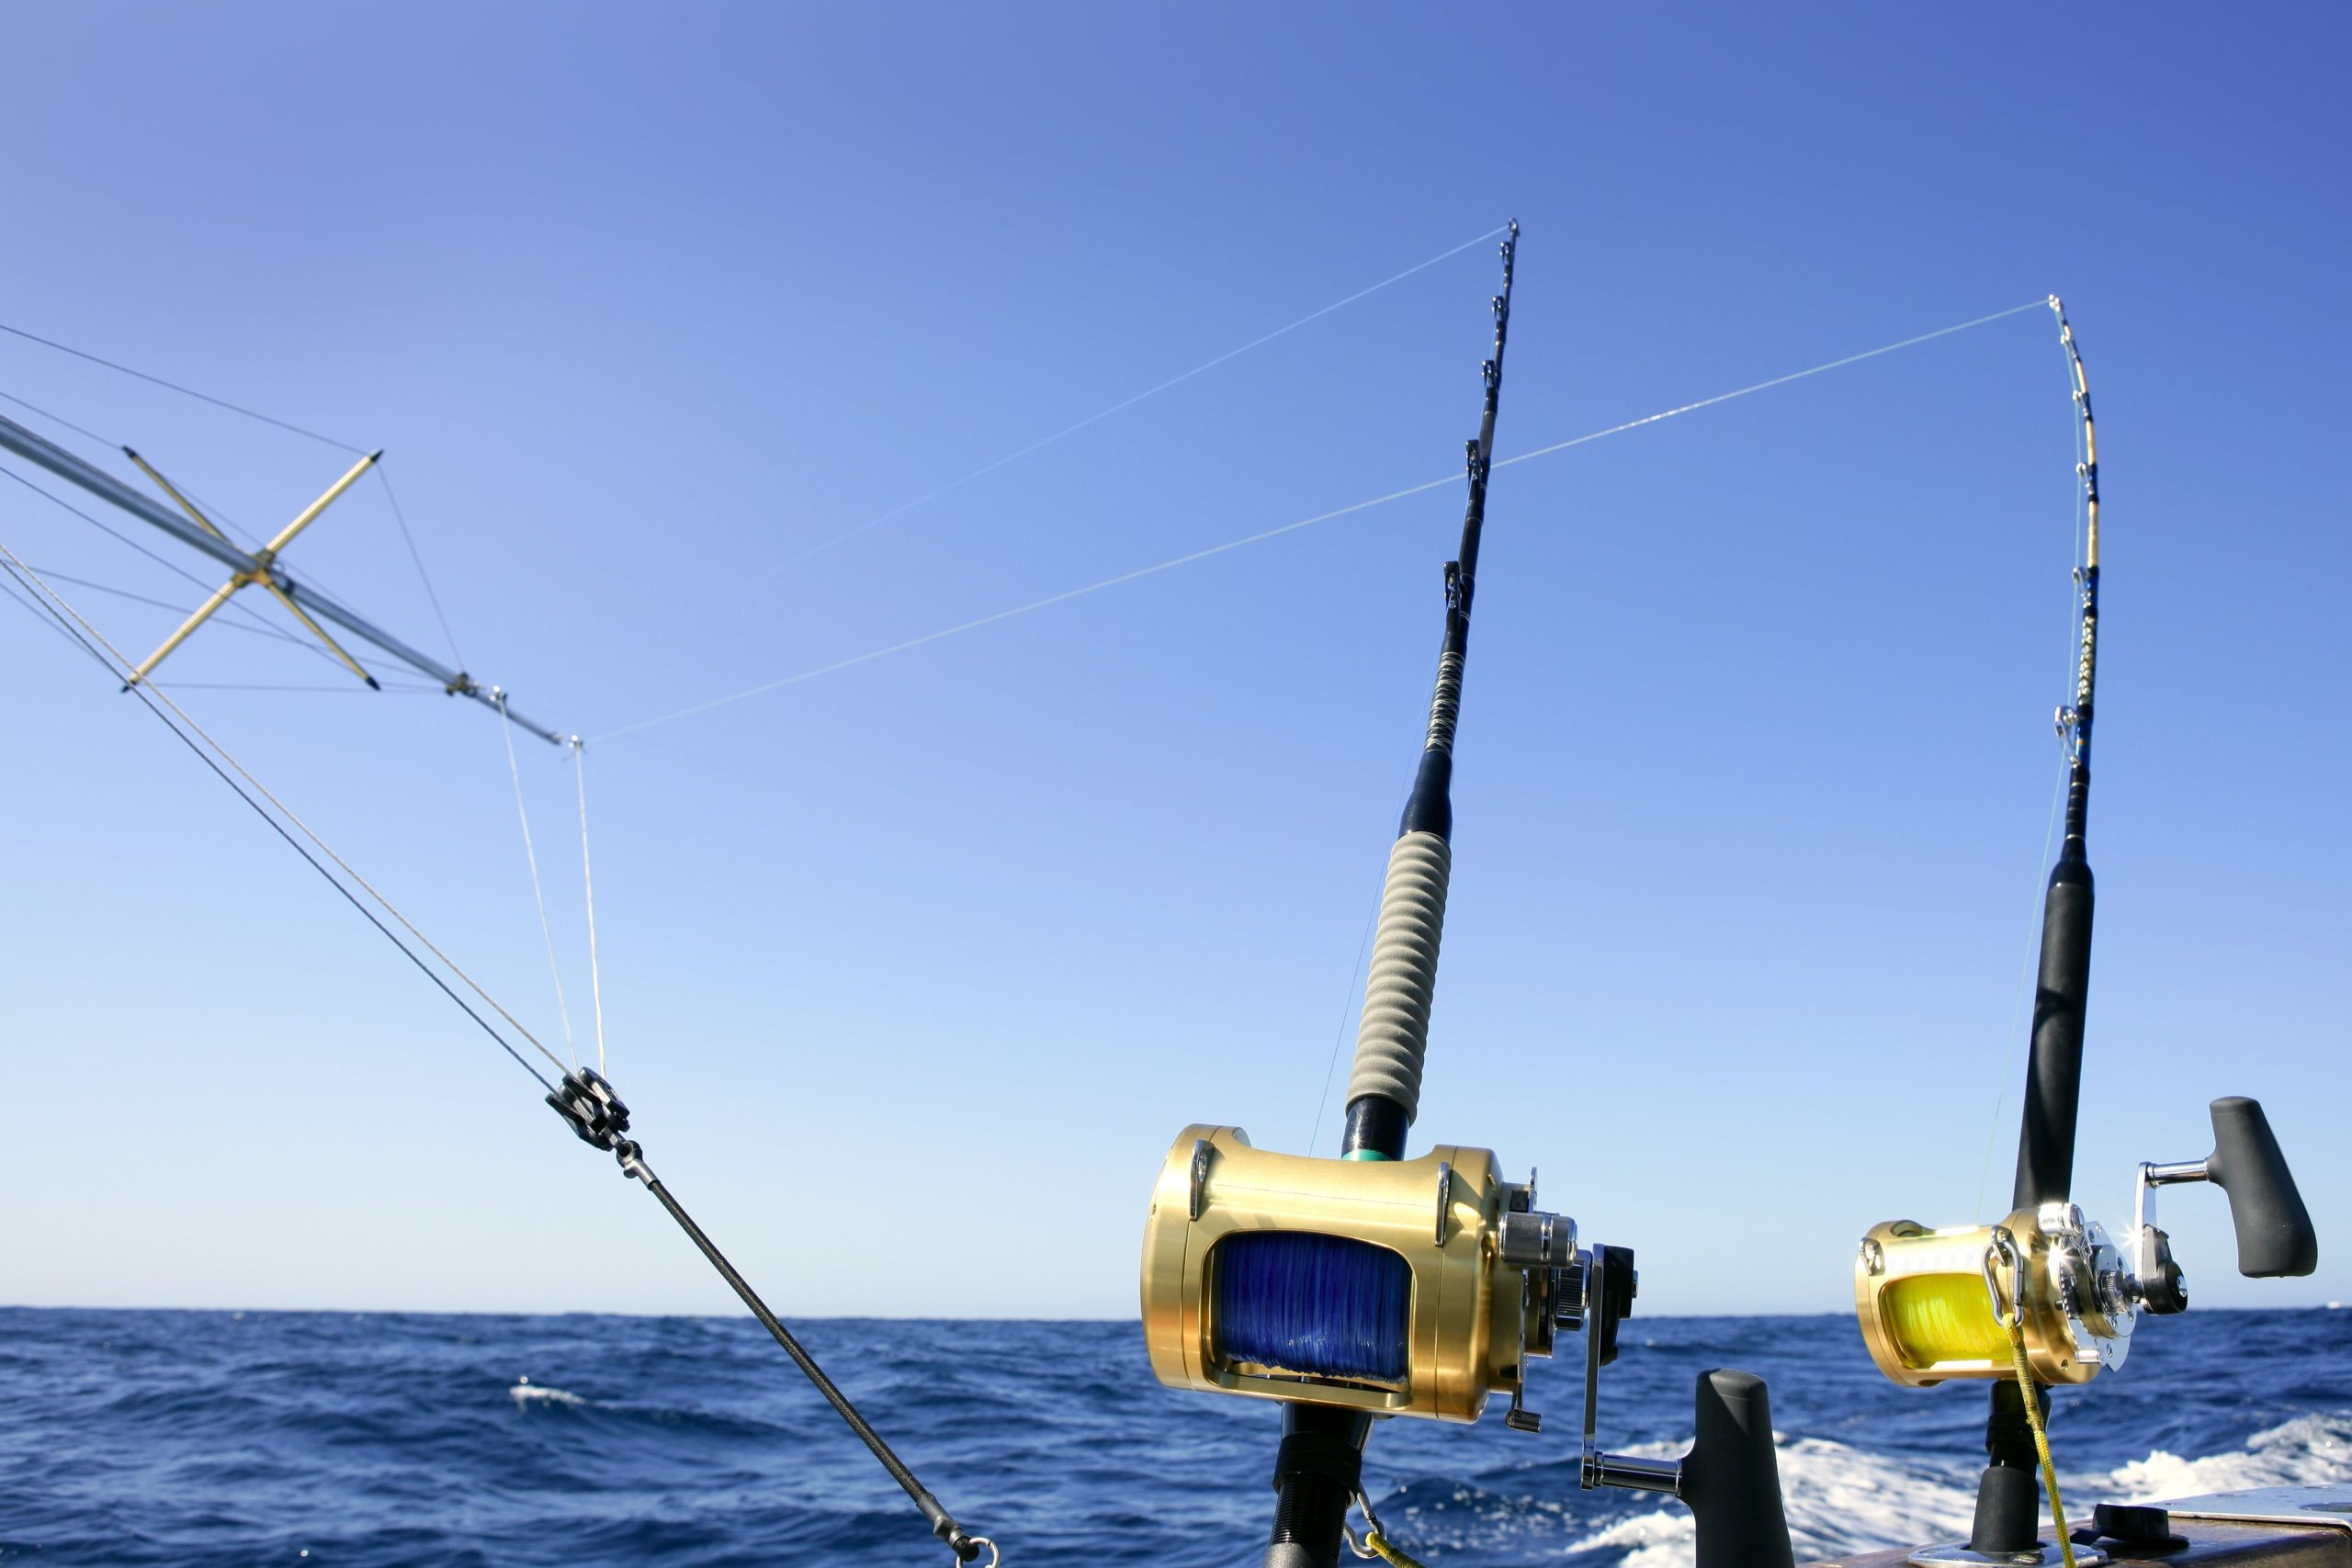 tuna fishing rod, tuna fishing rod Suppliers and Manufacturers at